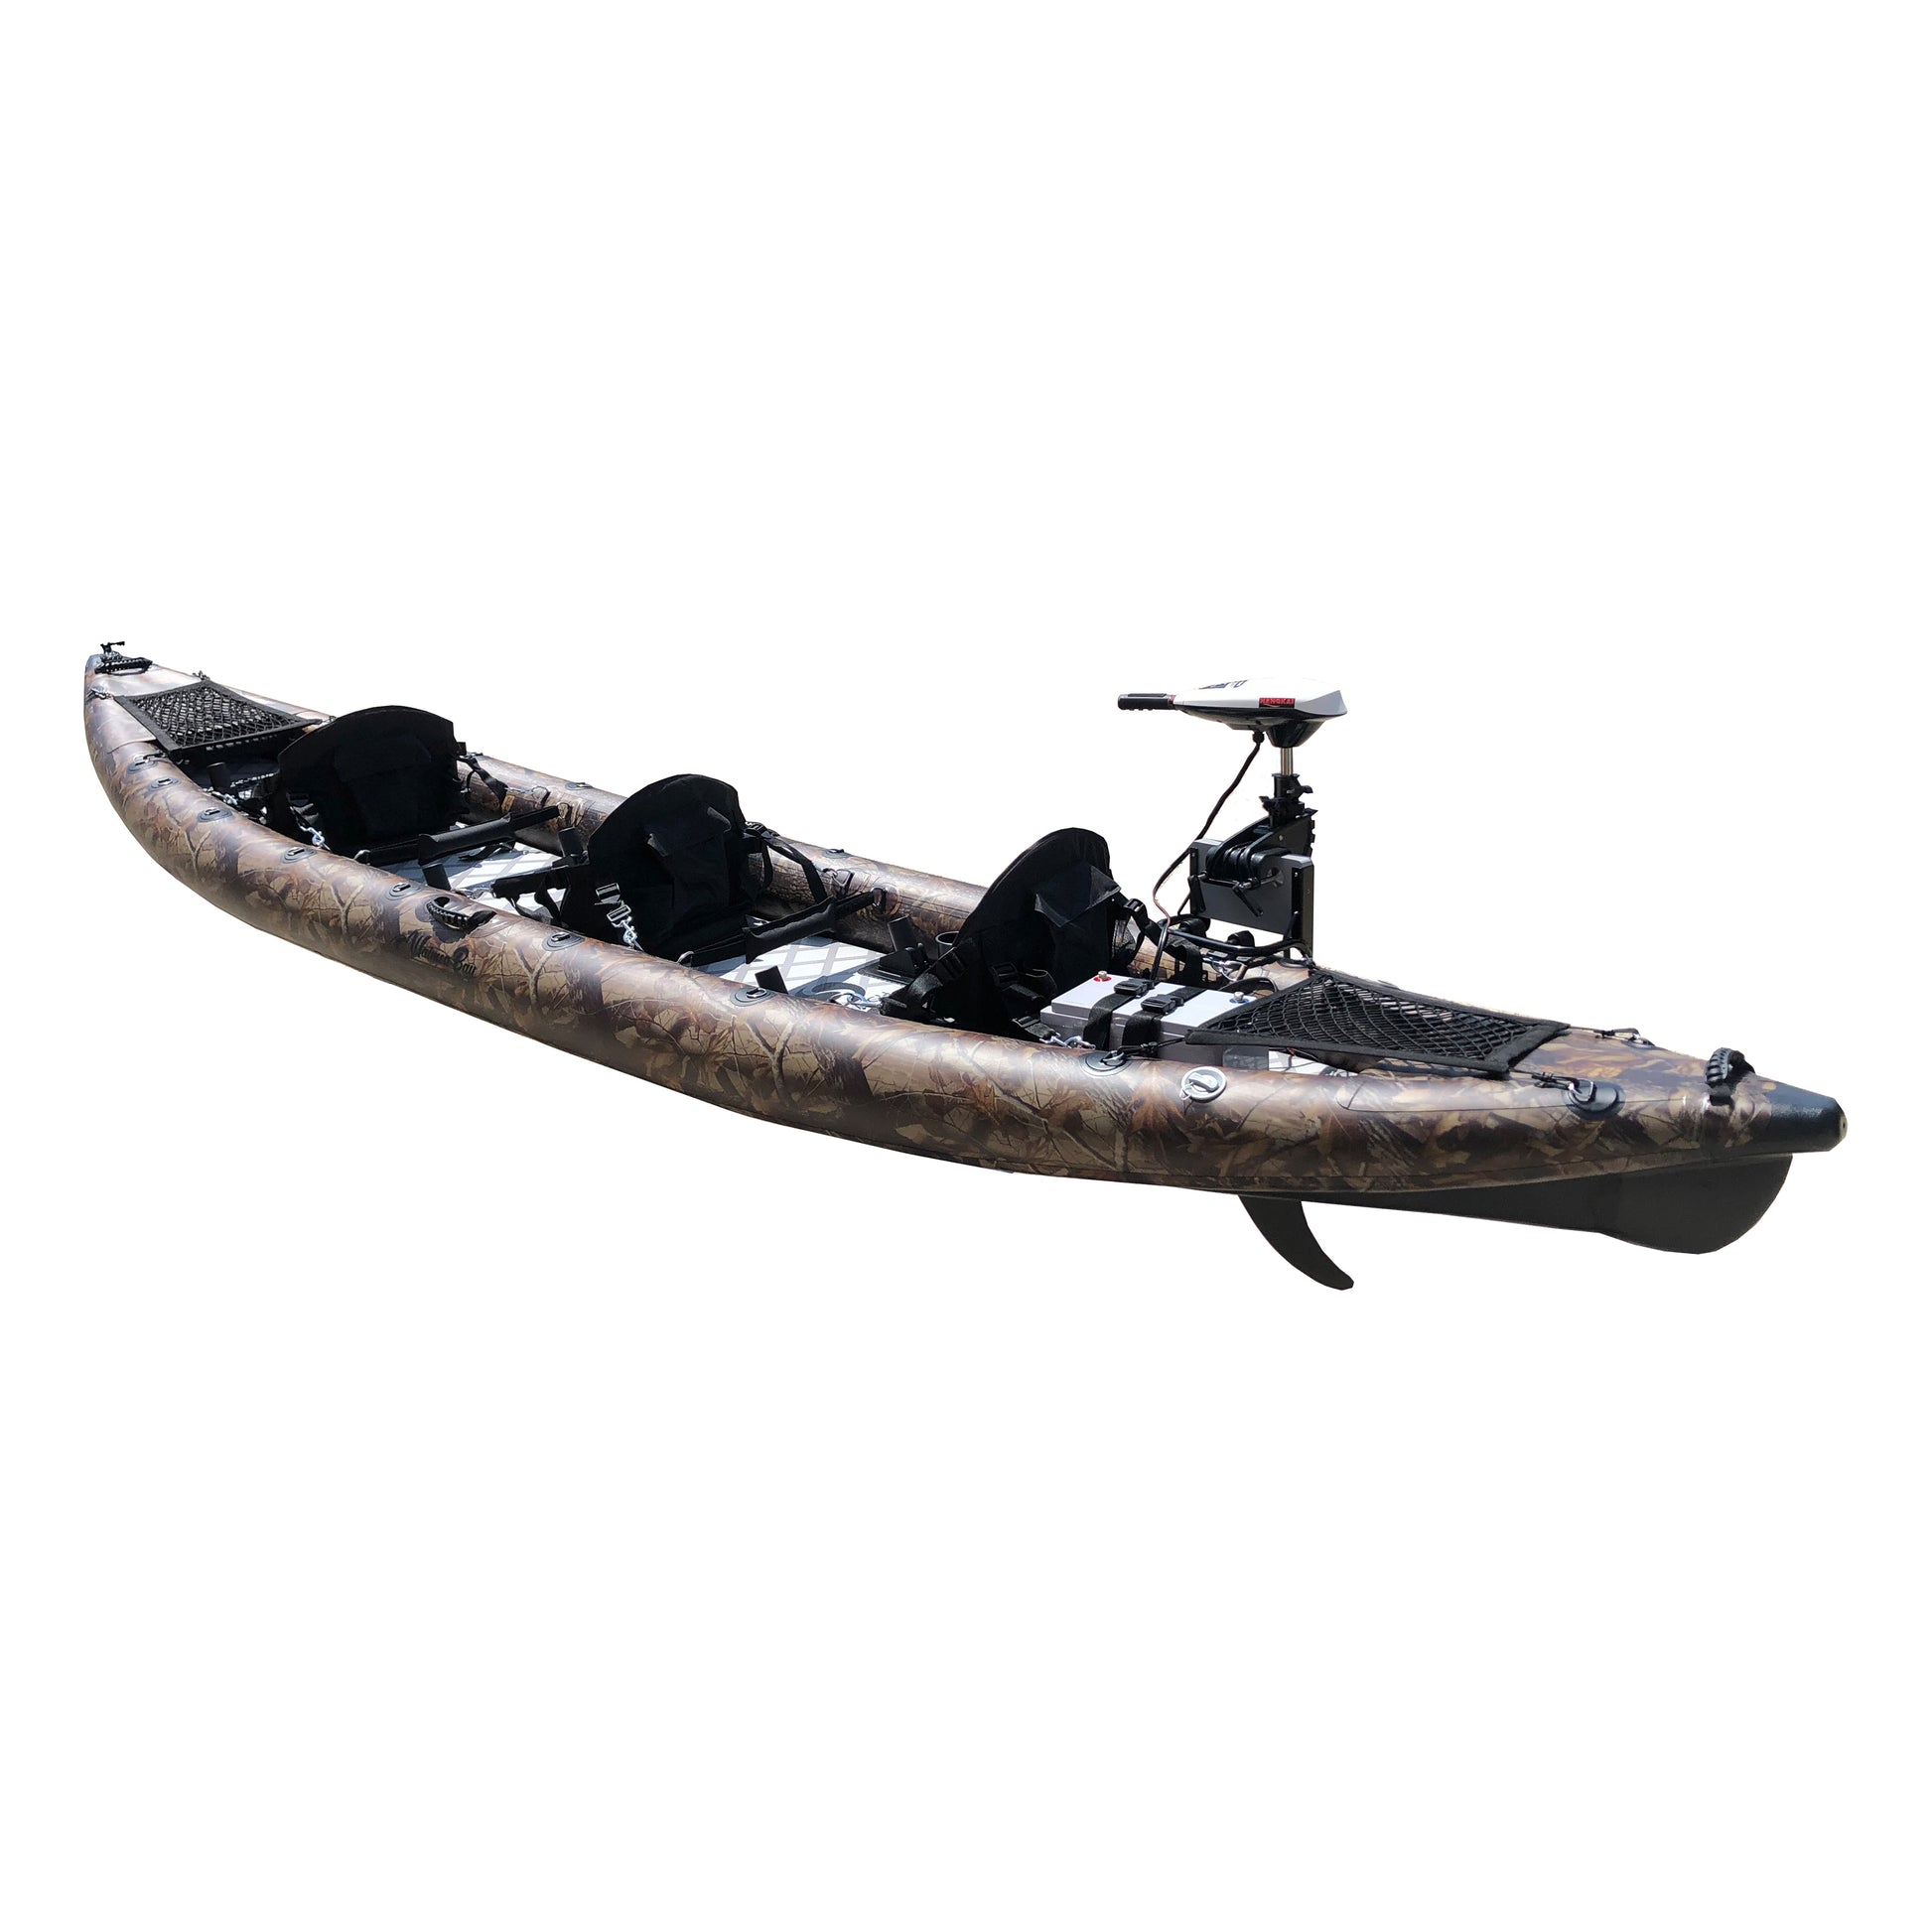 Shockwave Inflatable Kayak